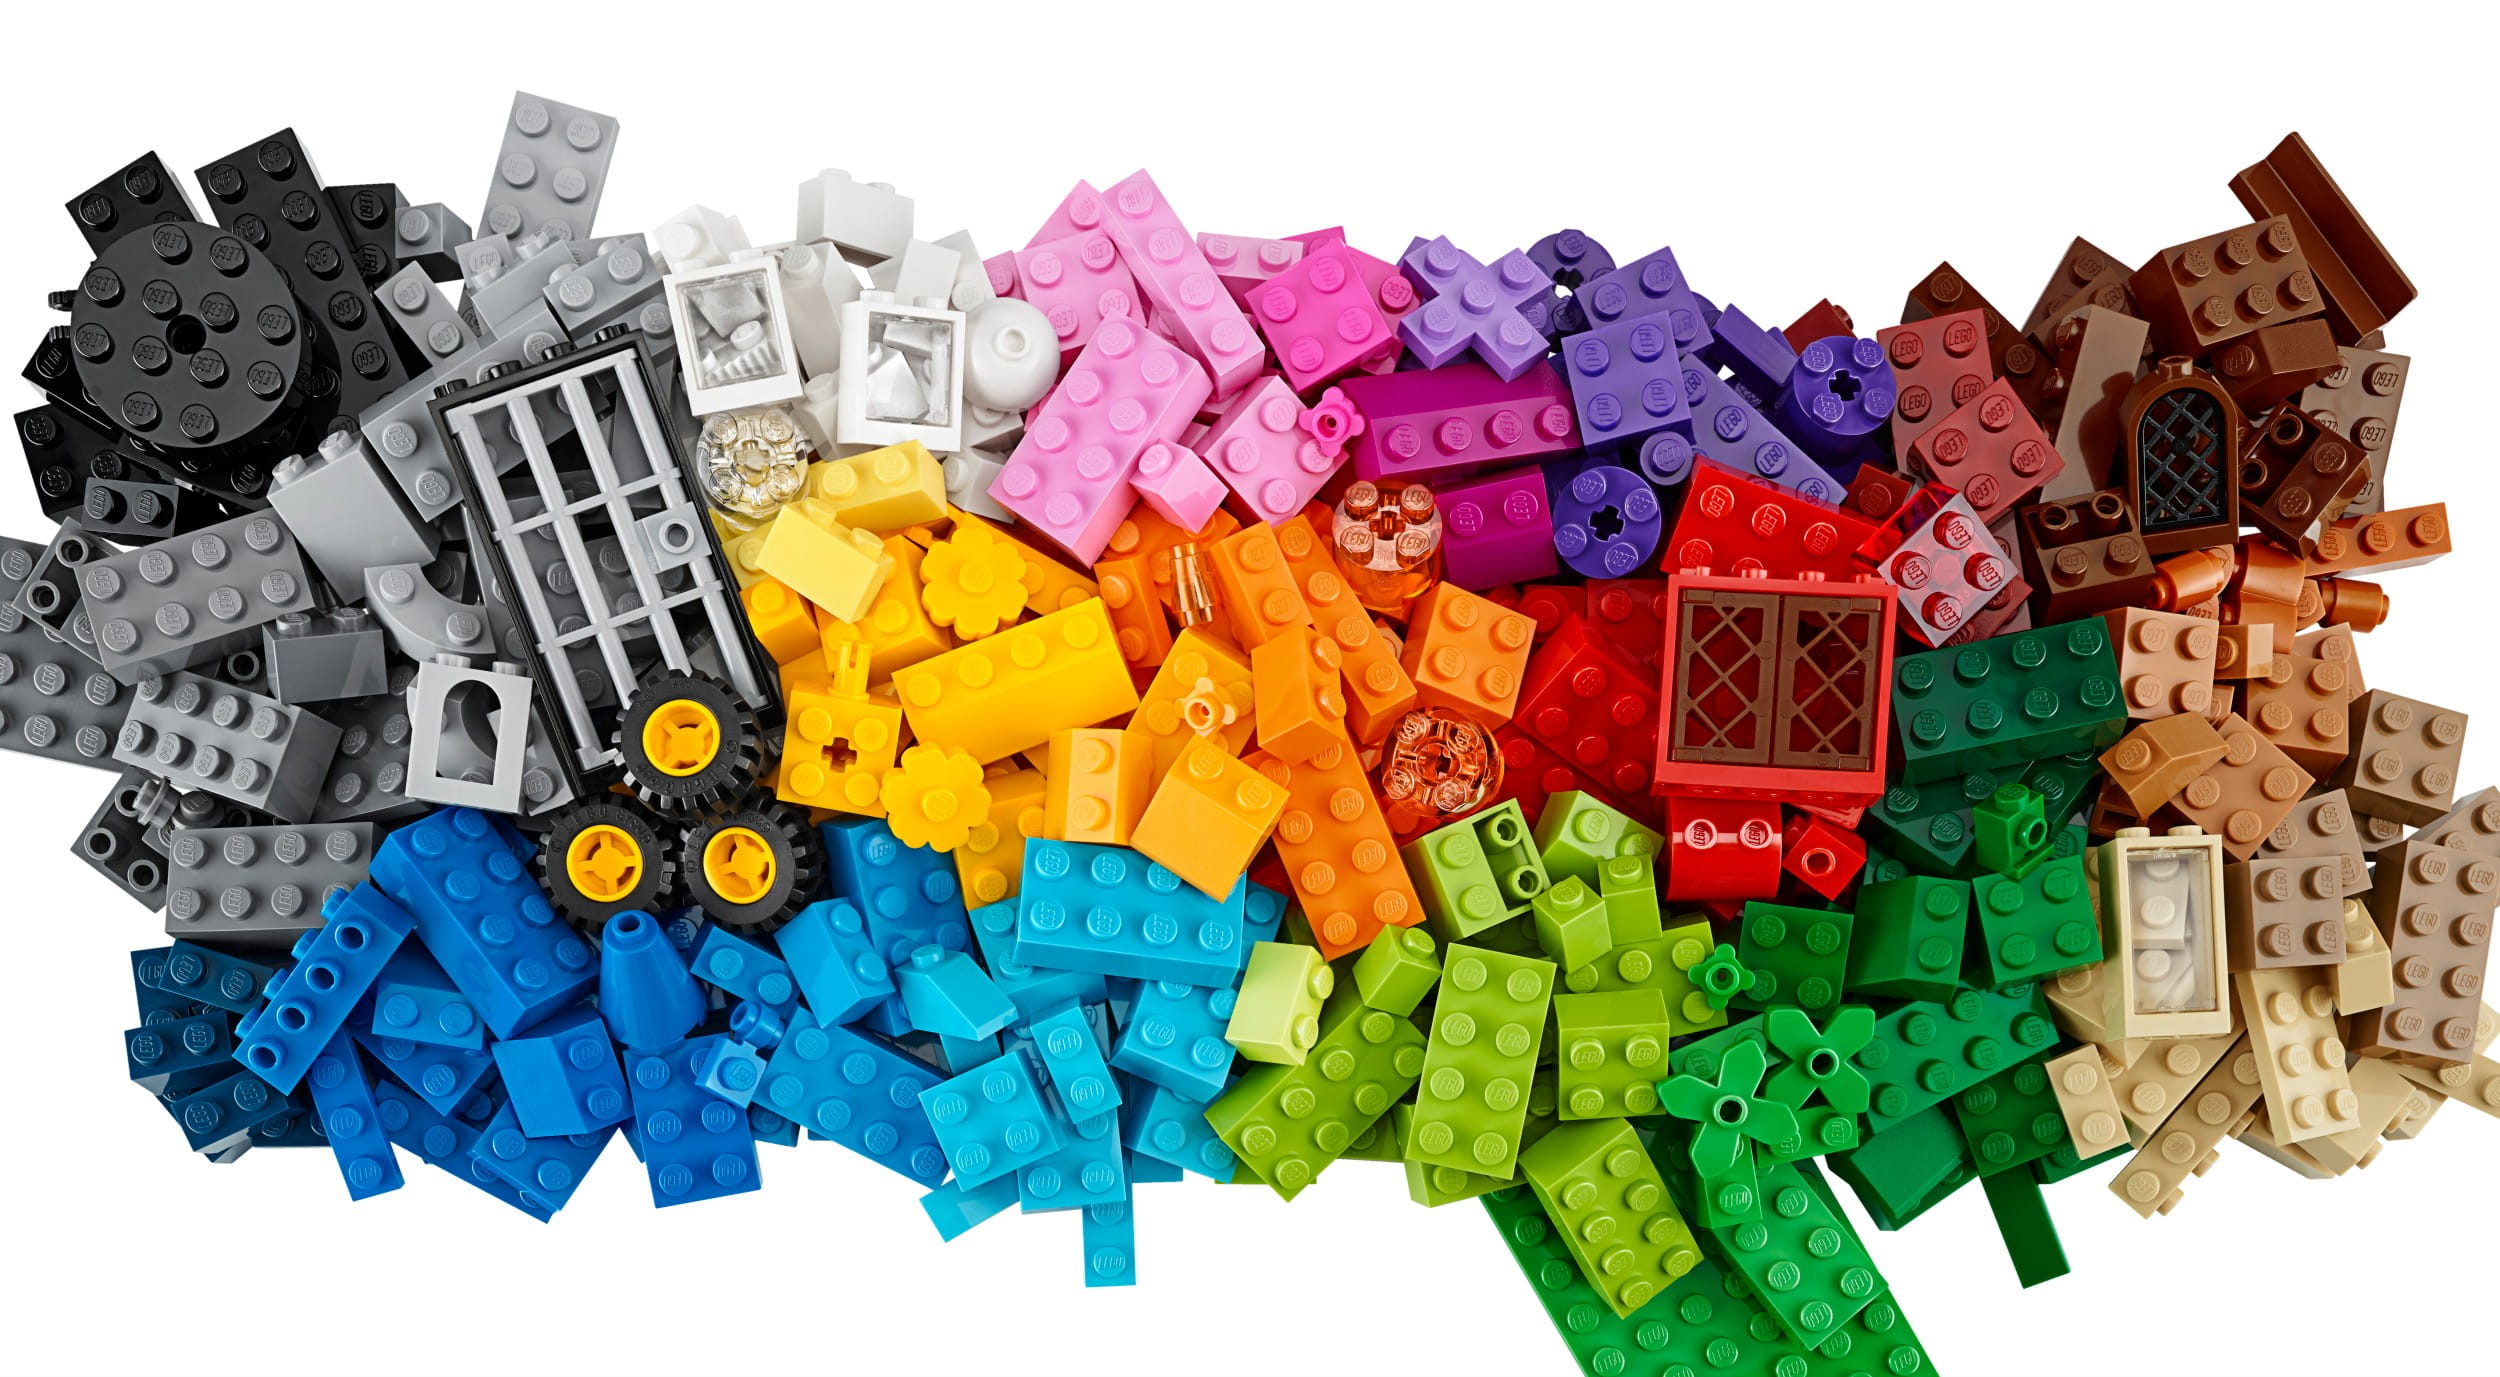 LEGO Classic Große Bausteine - Box